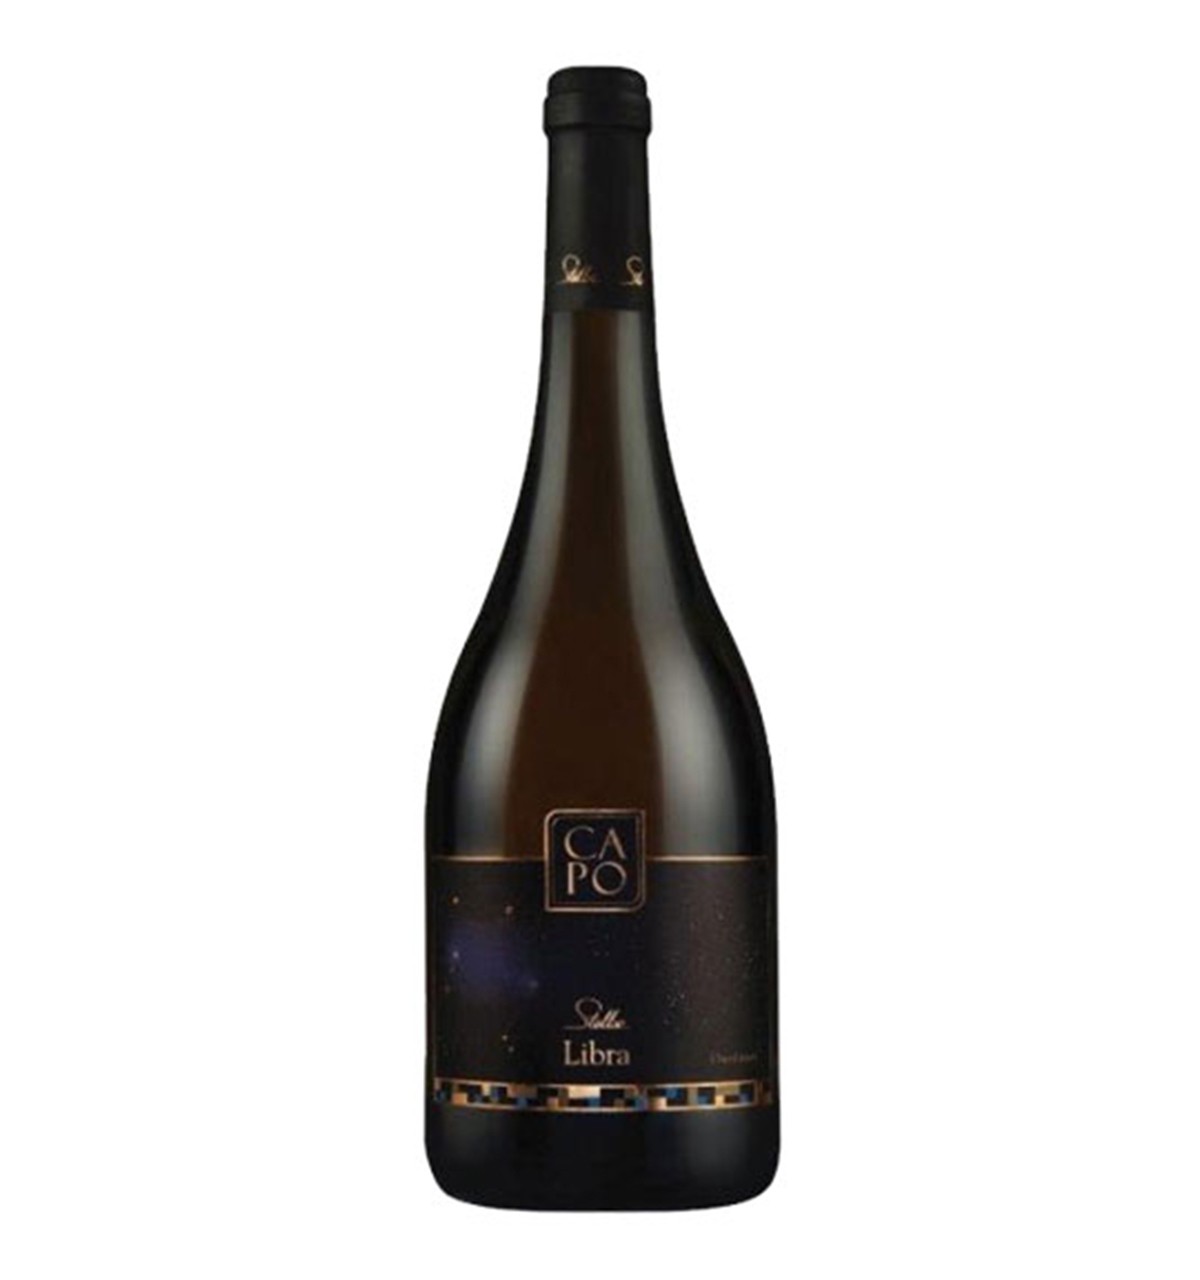 Libra- Chardonnay, Capo vina